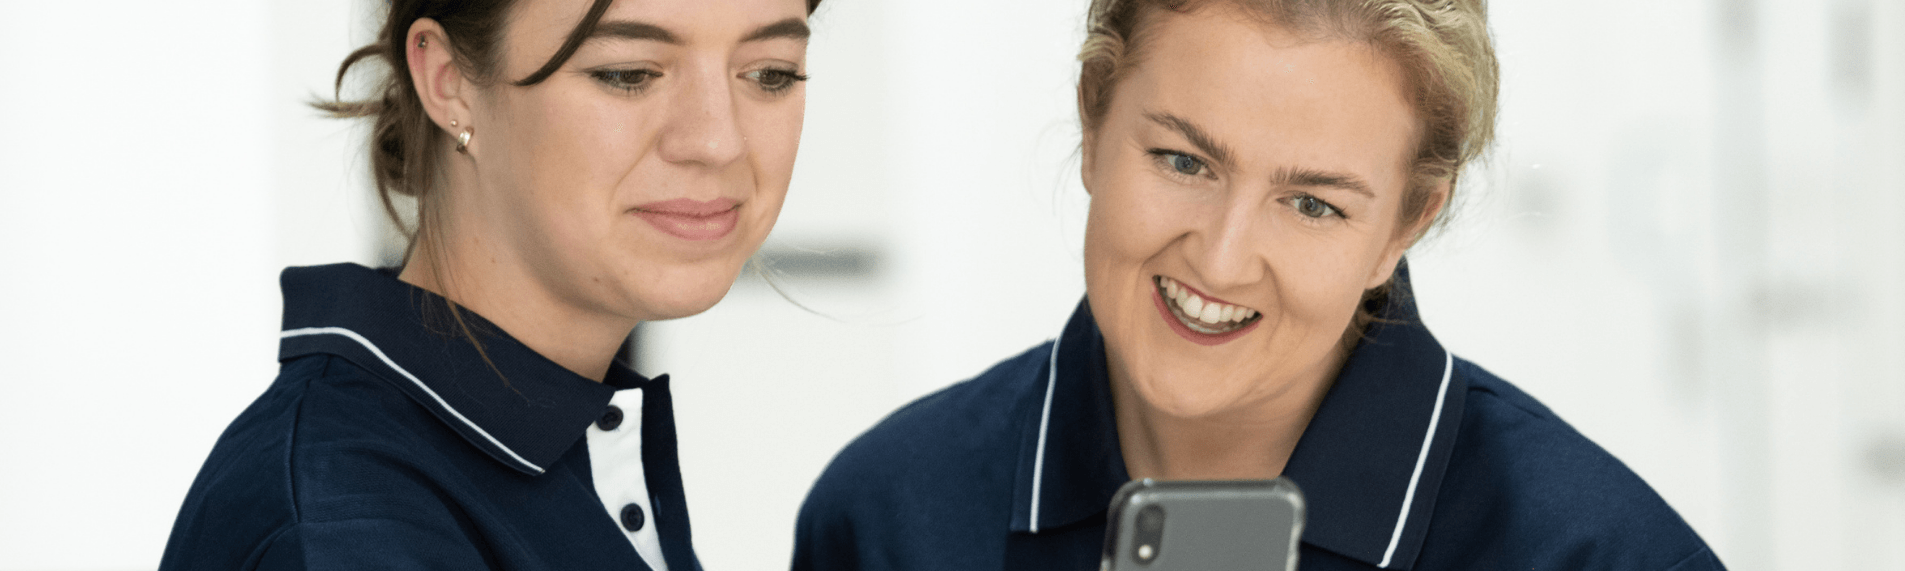 Nursing Jobs Gold Coast Queensland